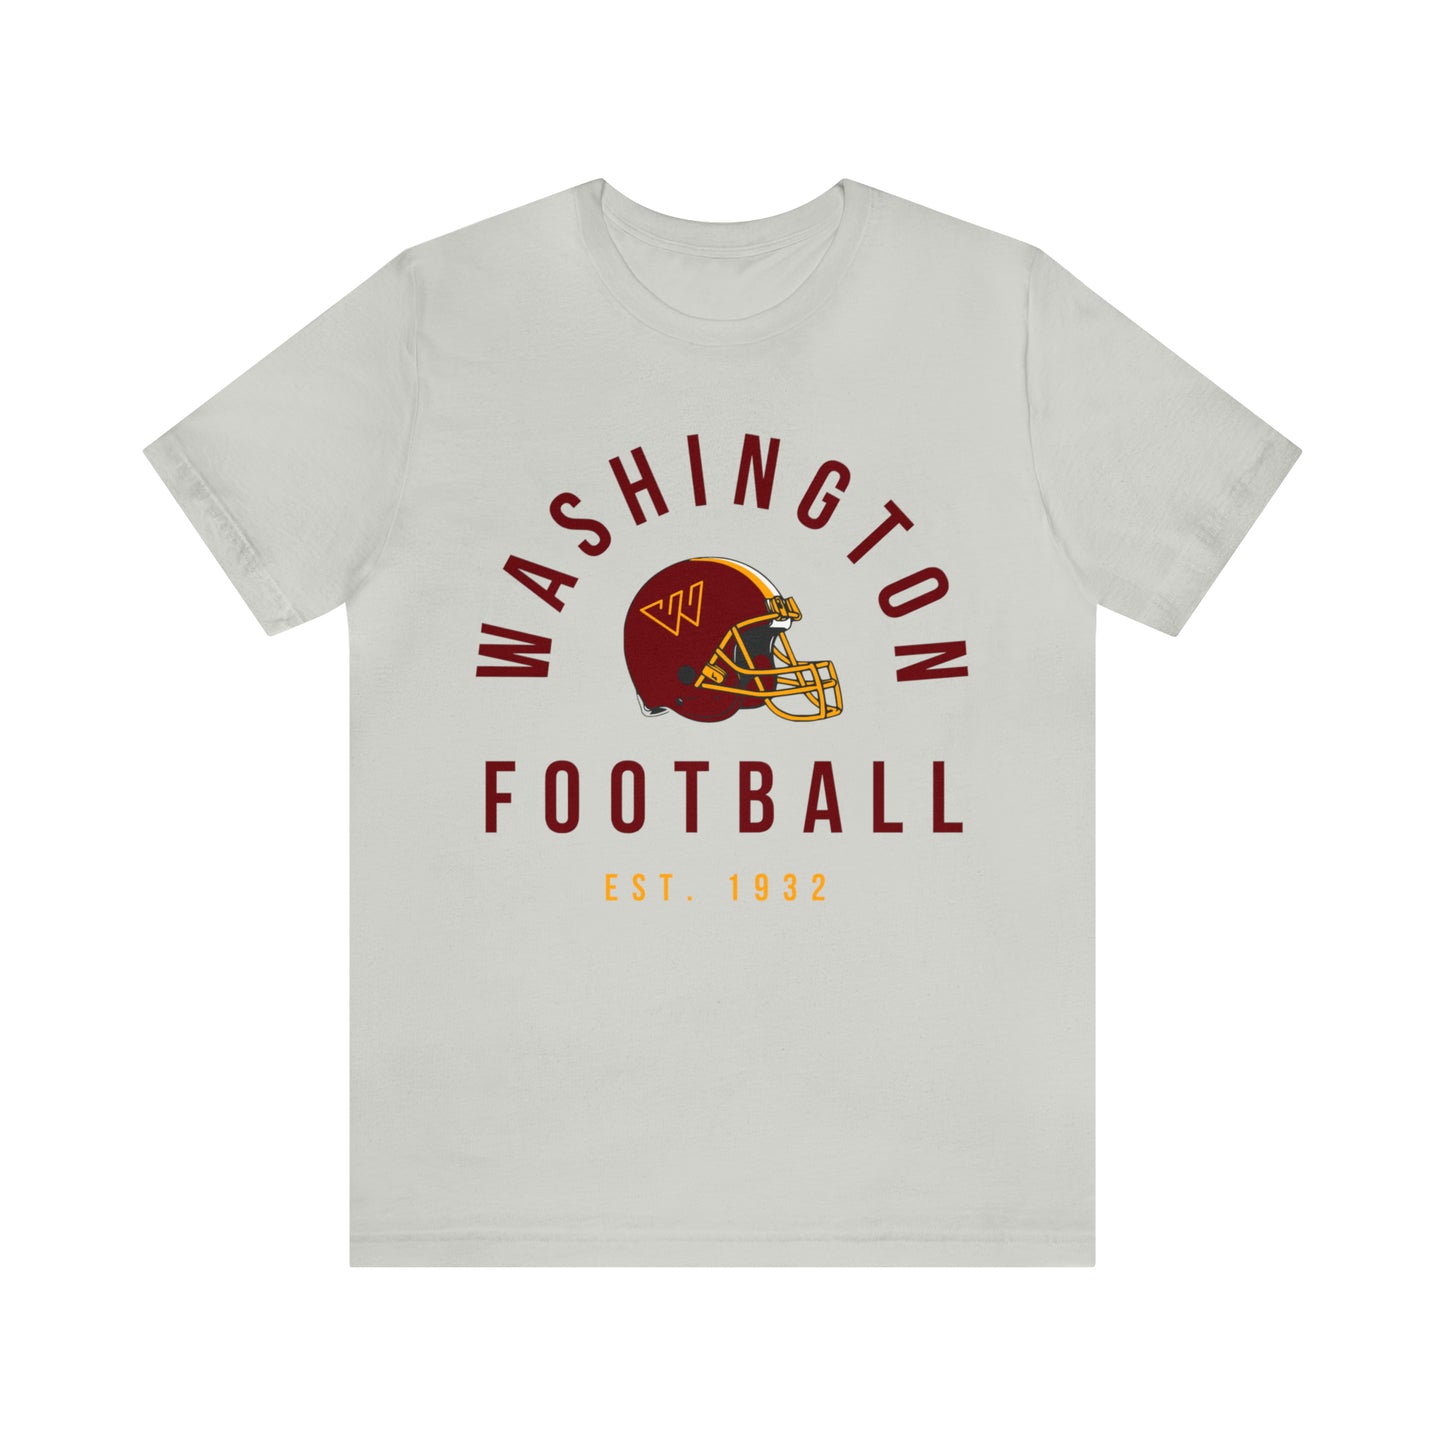 Throwback Washington Commanders Short Sleeve T-Shirt - Vintage Football Tee - Retro Redskins 70's, 80's, 90's - Design 2